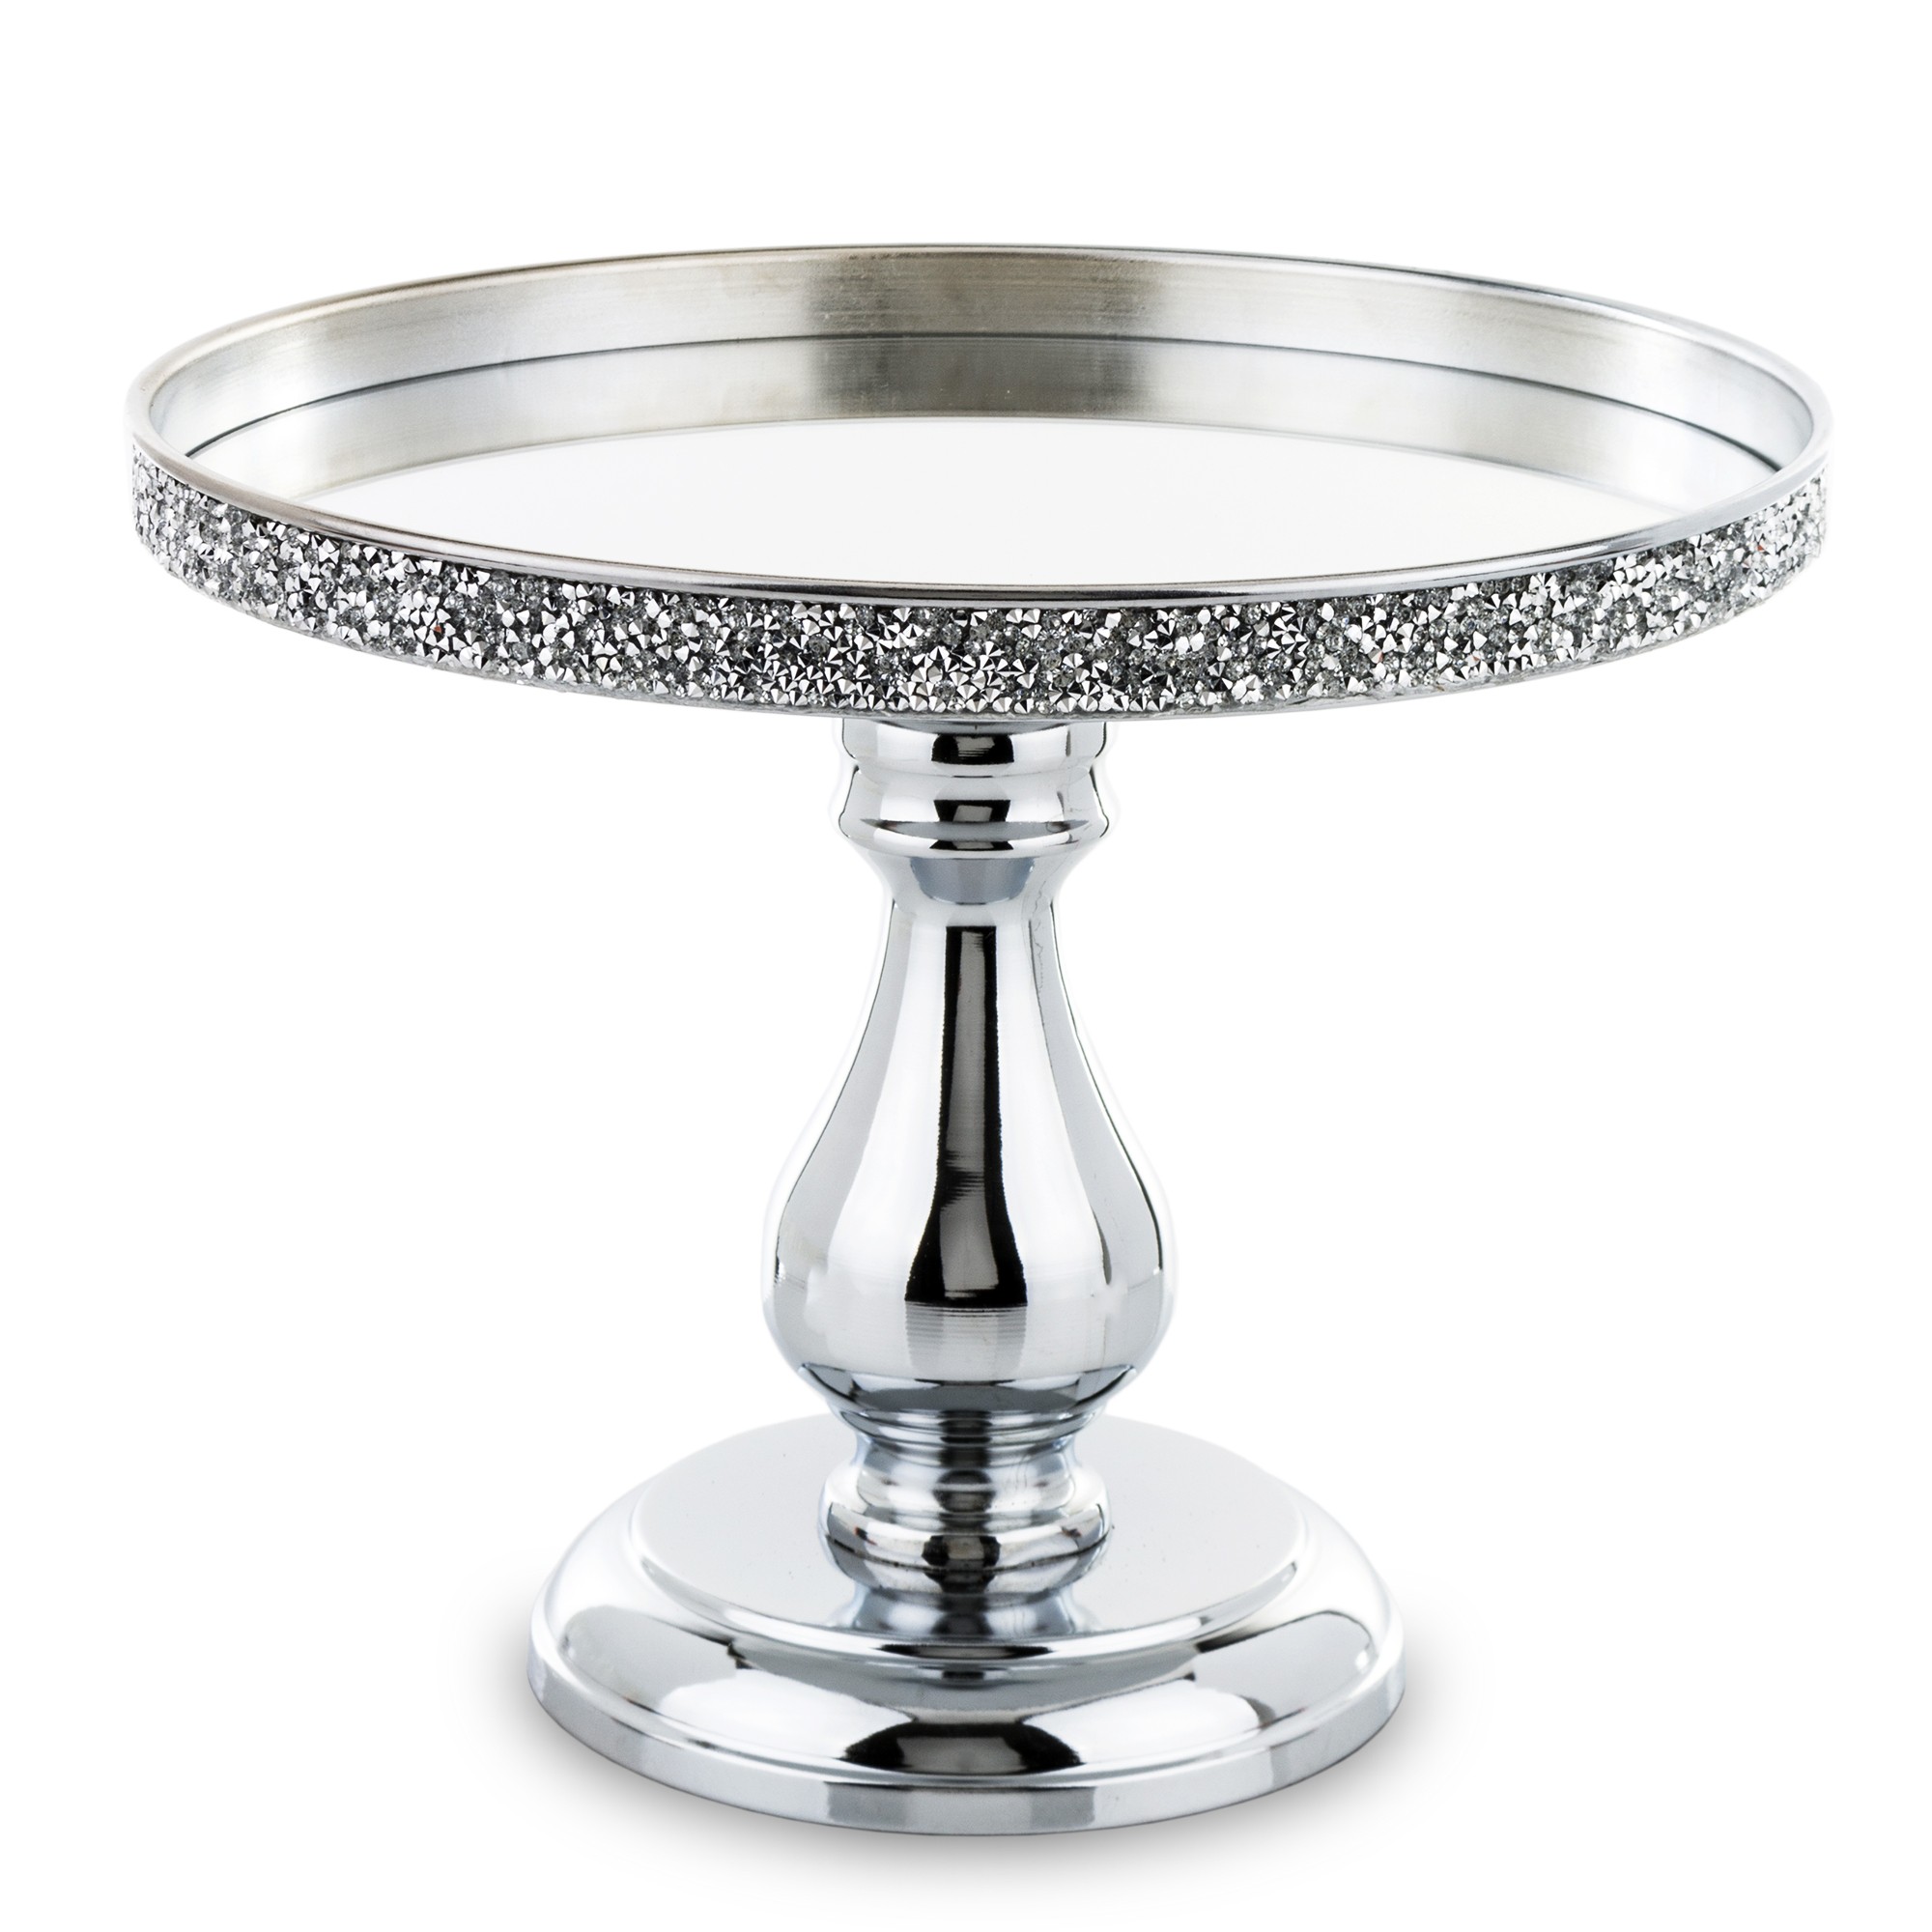 Patera Dekoracyjna srebrna metal szkło 142300 Art-Pol